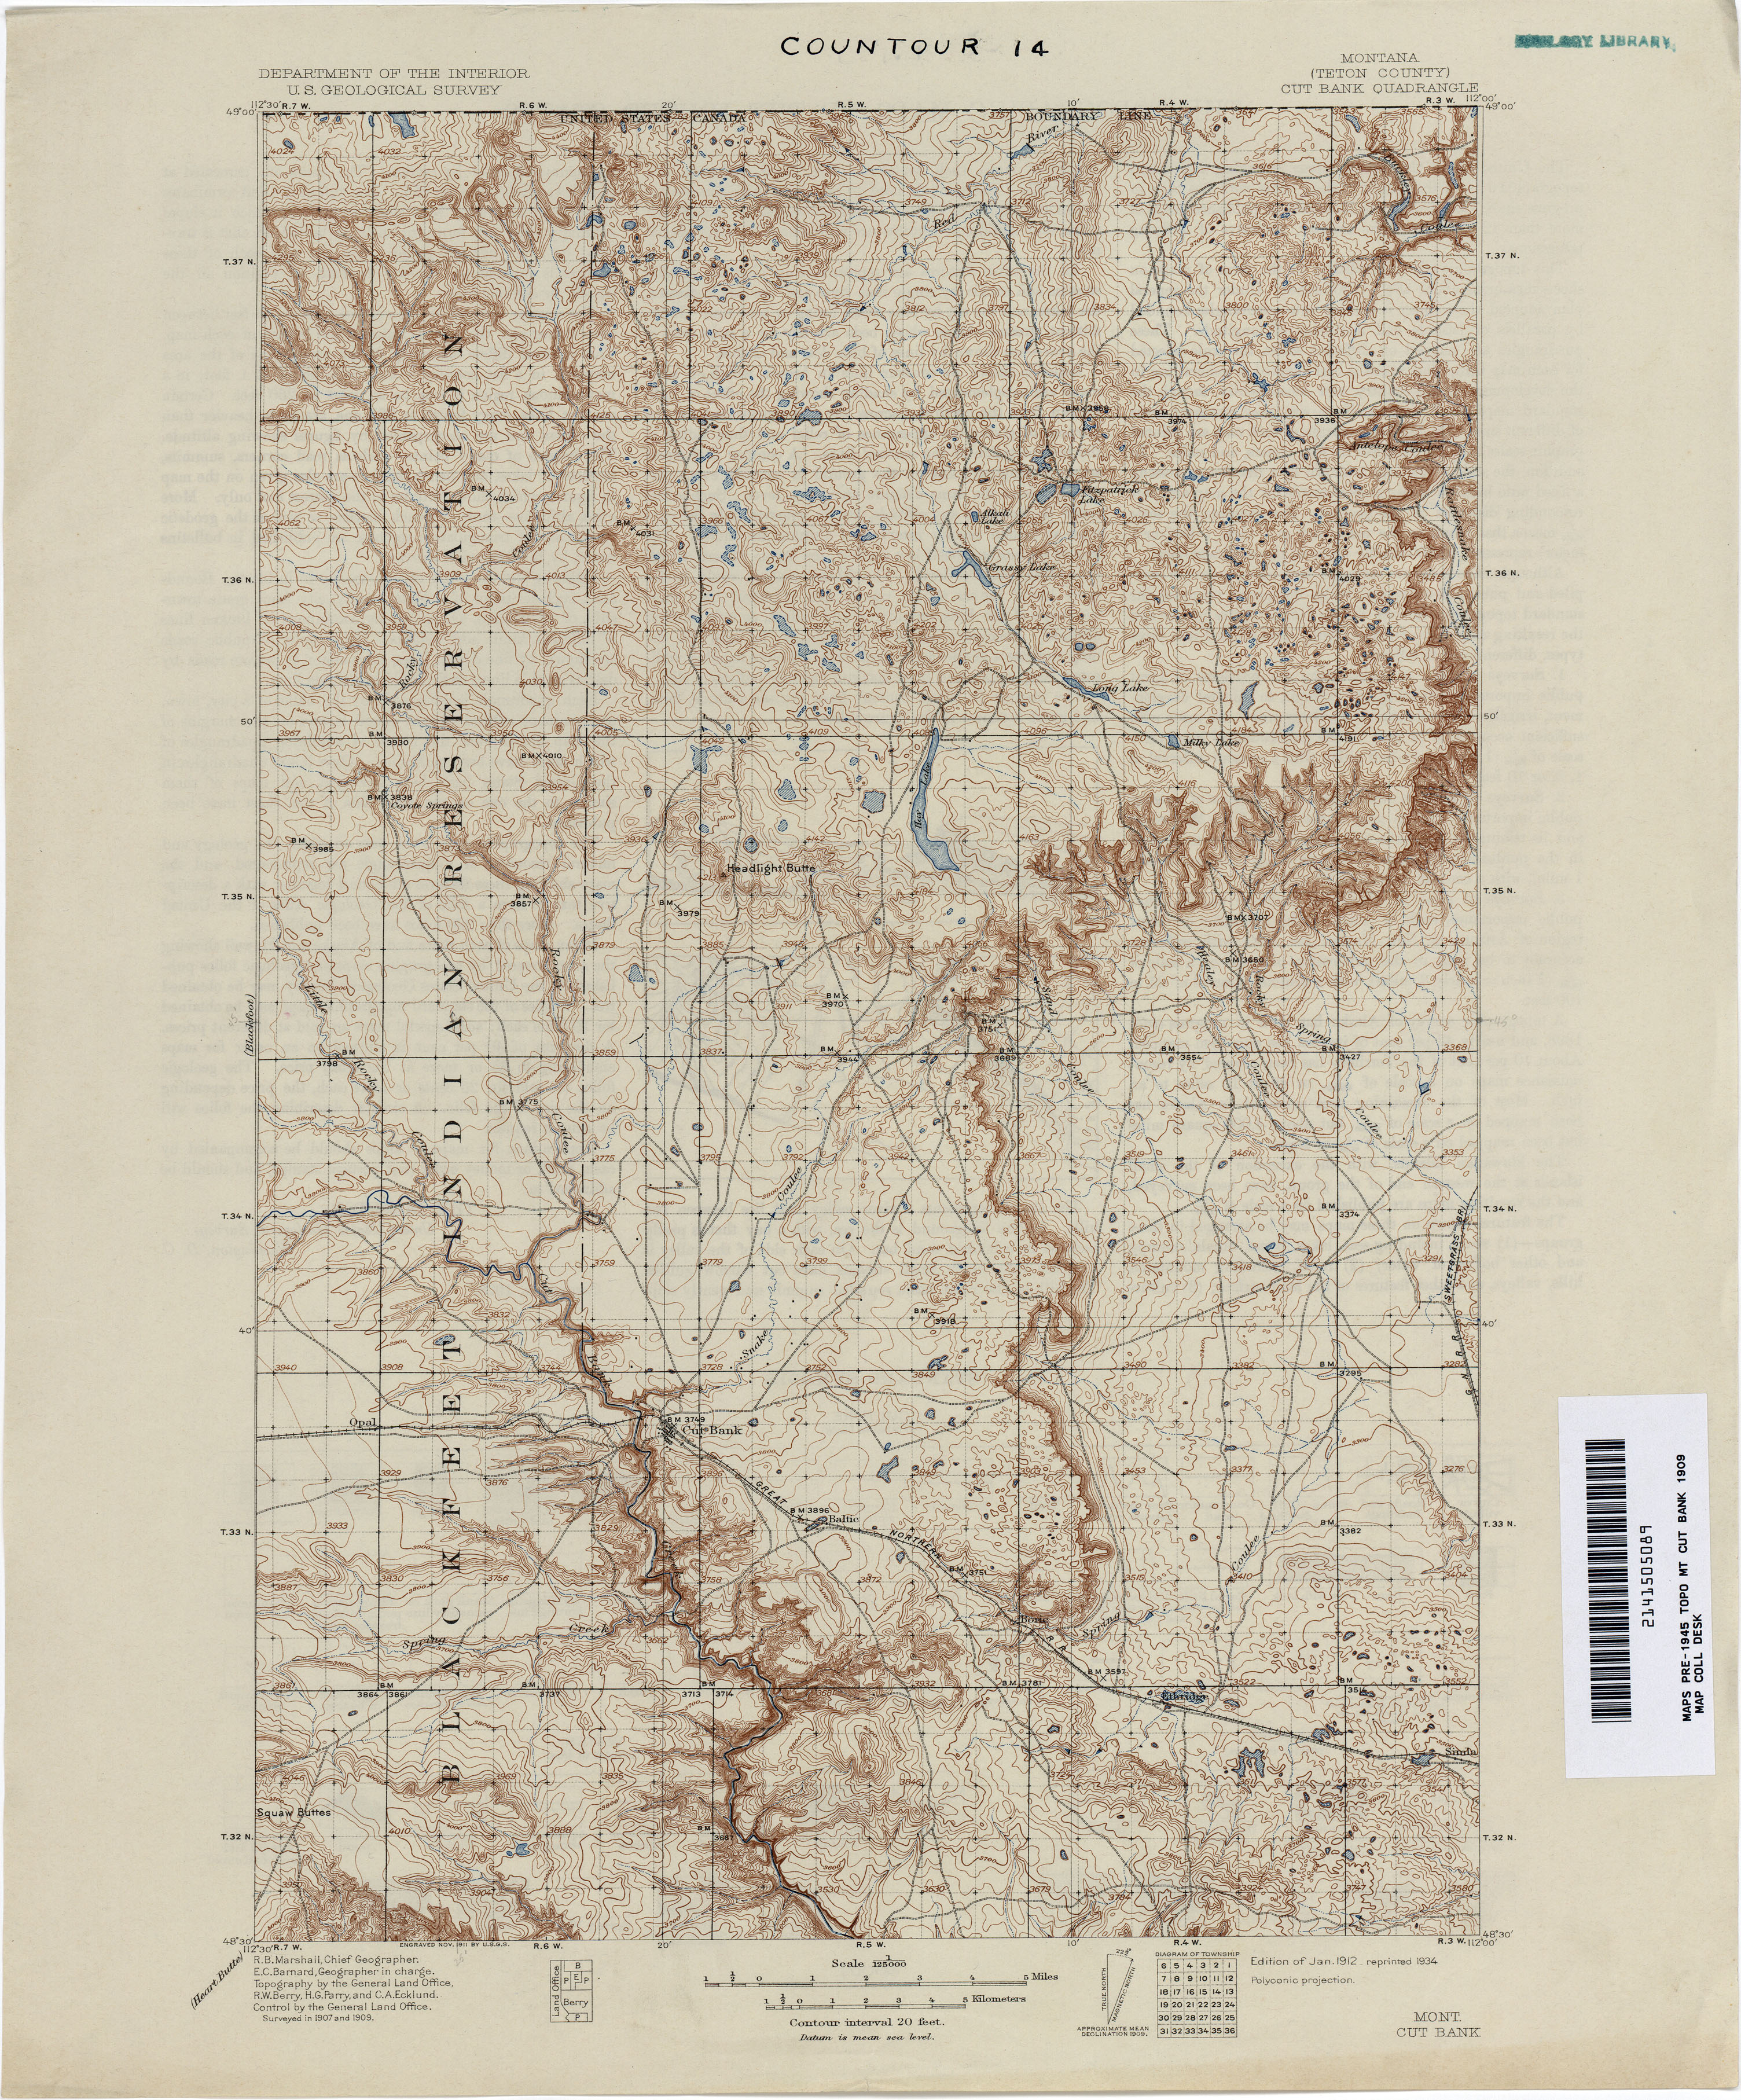 ed.1981 MILES CITY Russian Soviet Military Topographic Maps USA, Montana 